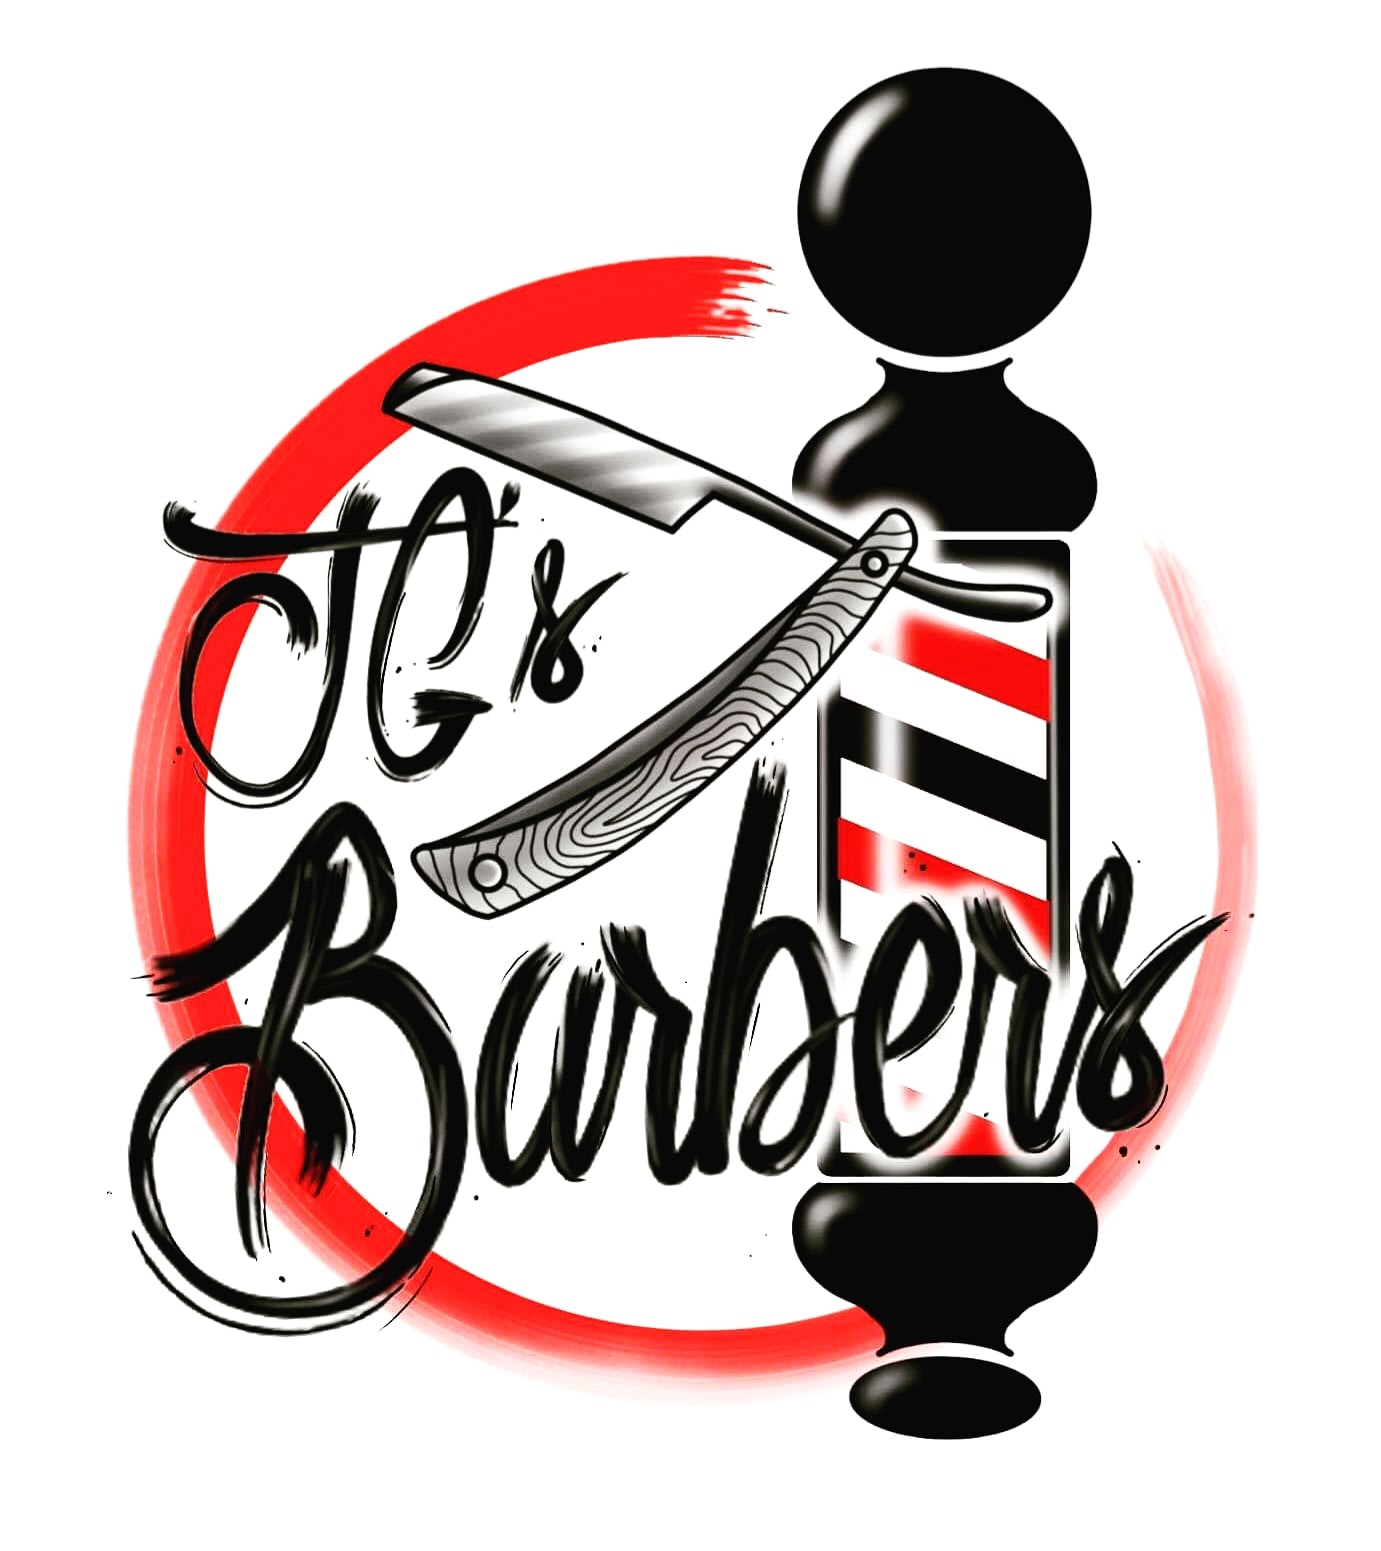 JG's Barbers